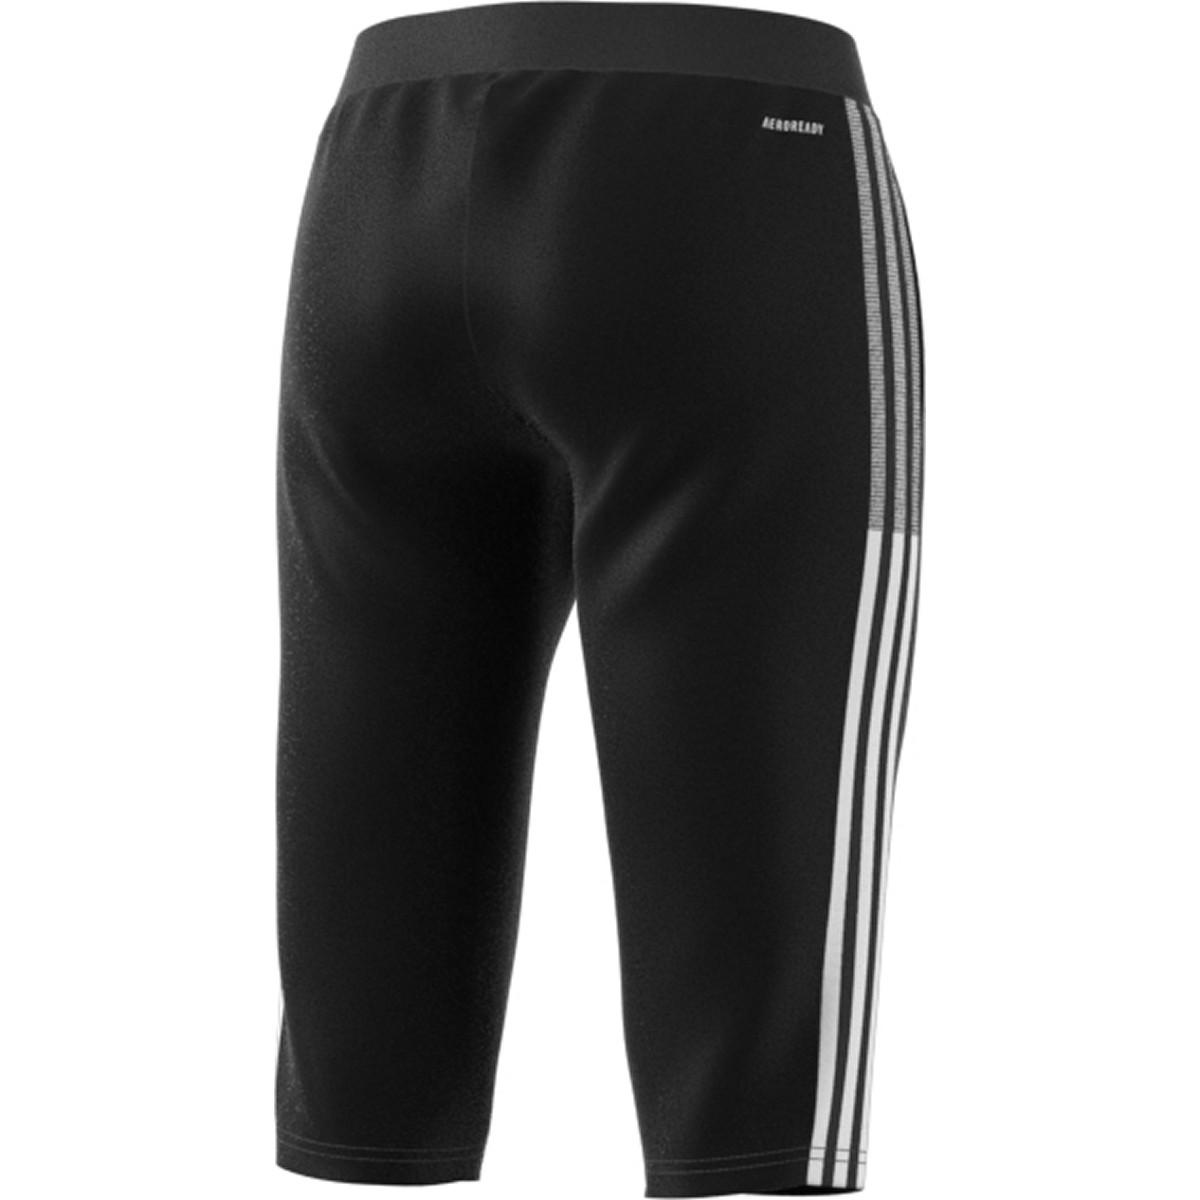 Adidas Women's Tiro 21 Track Pants - Black/White